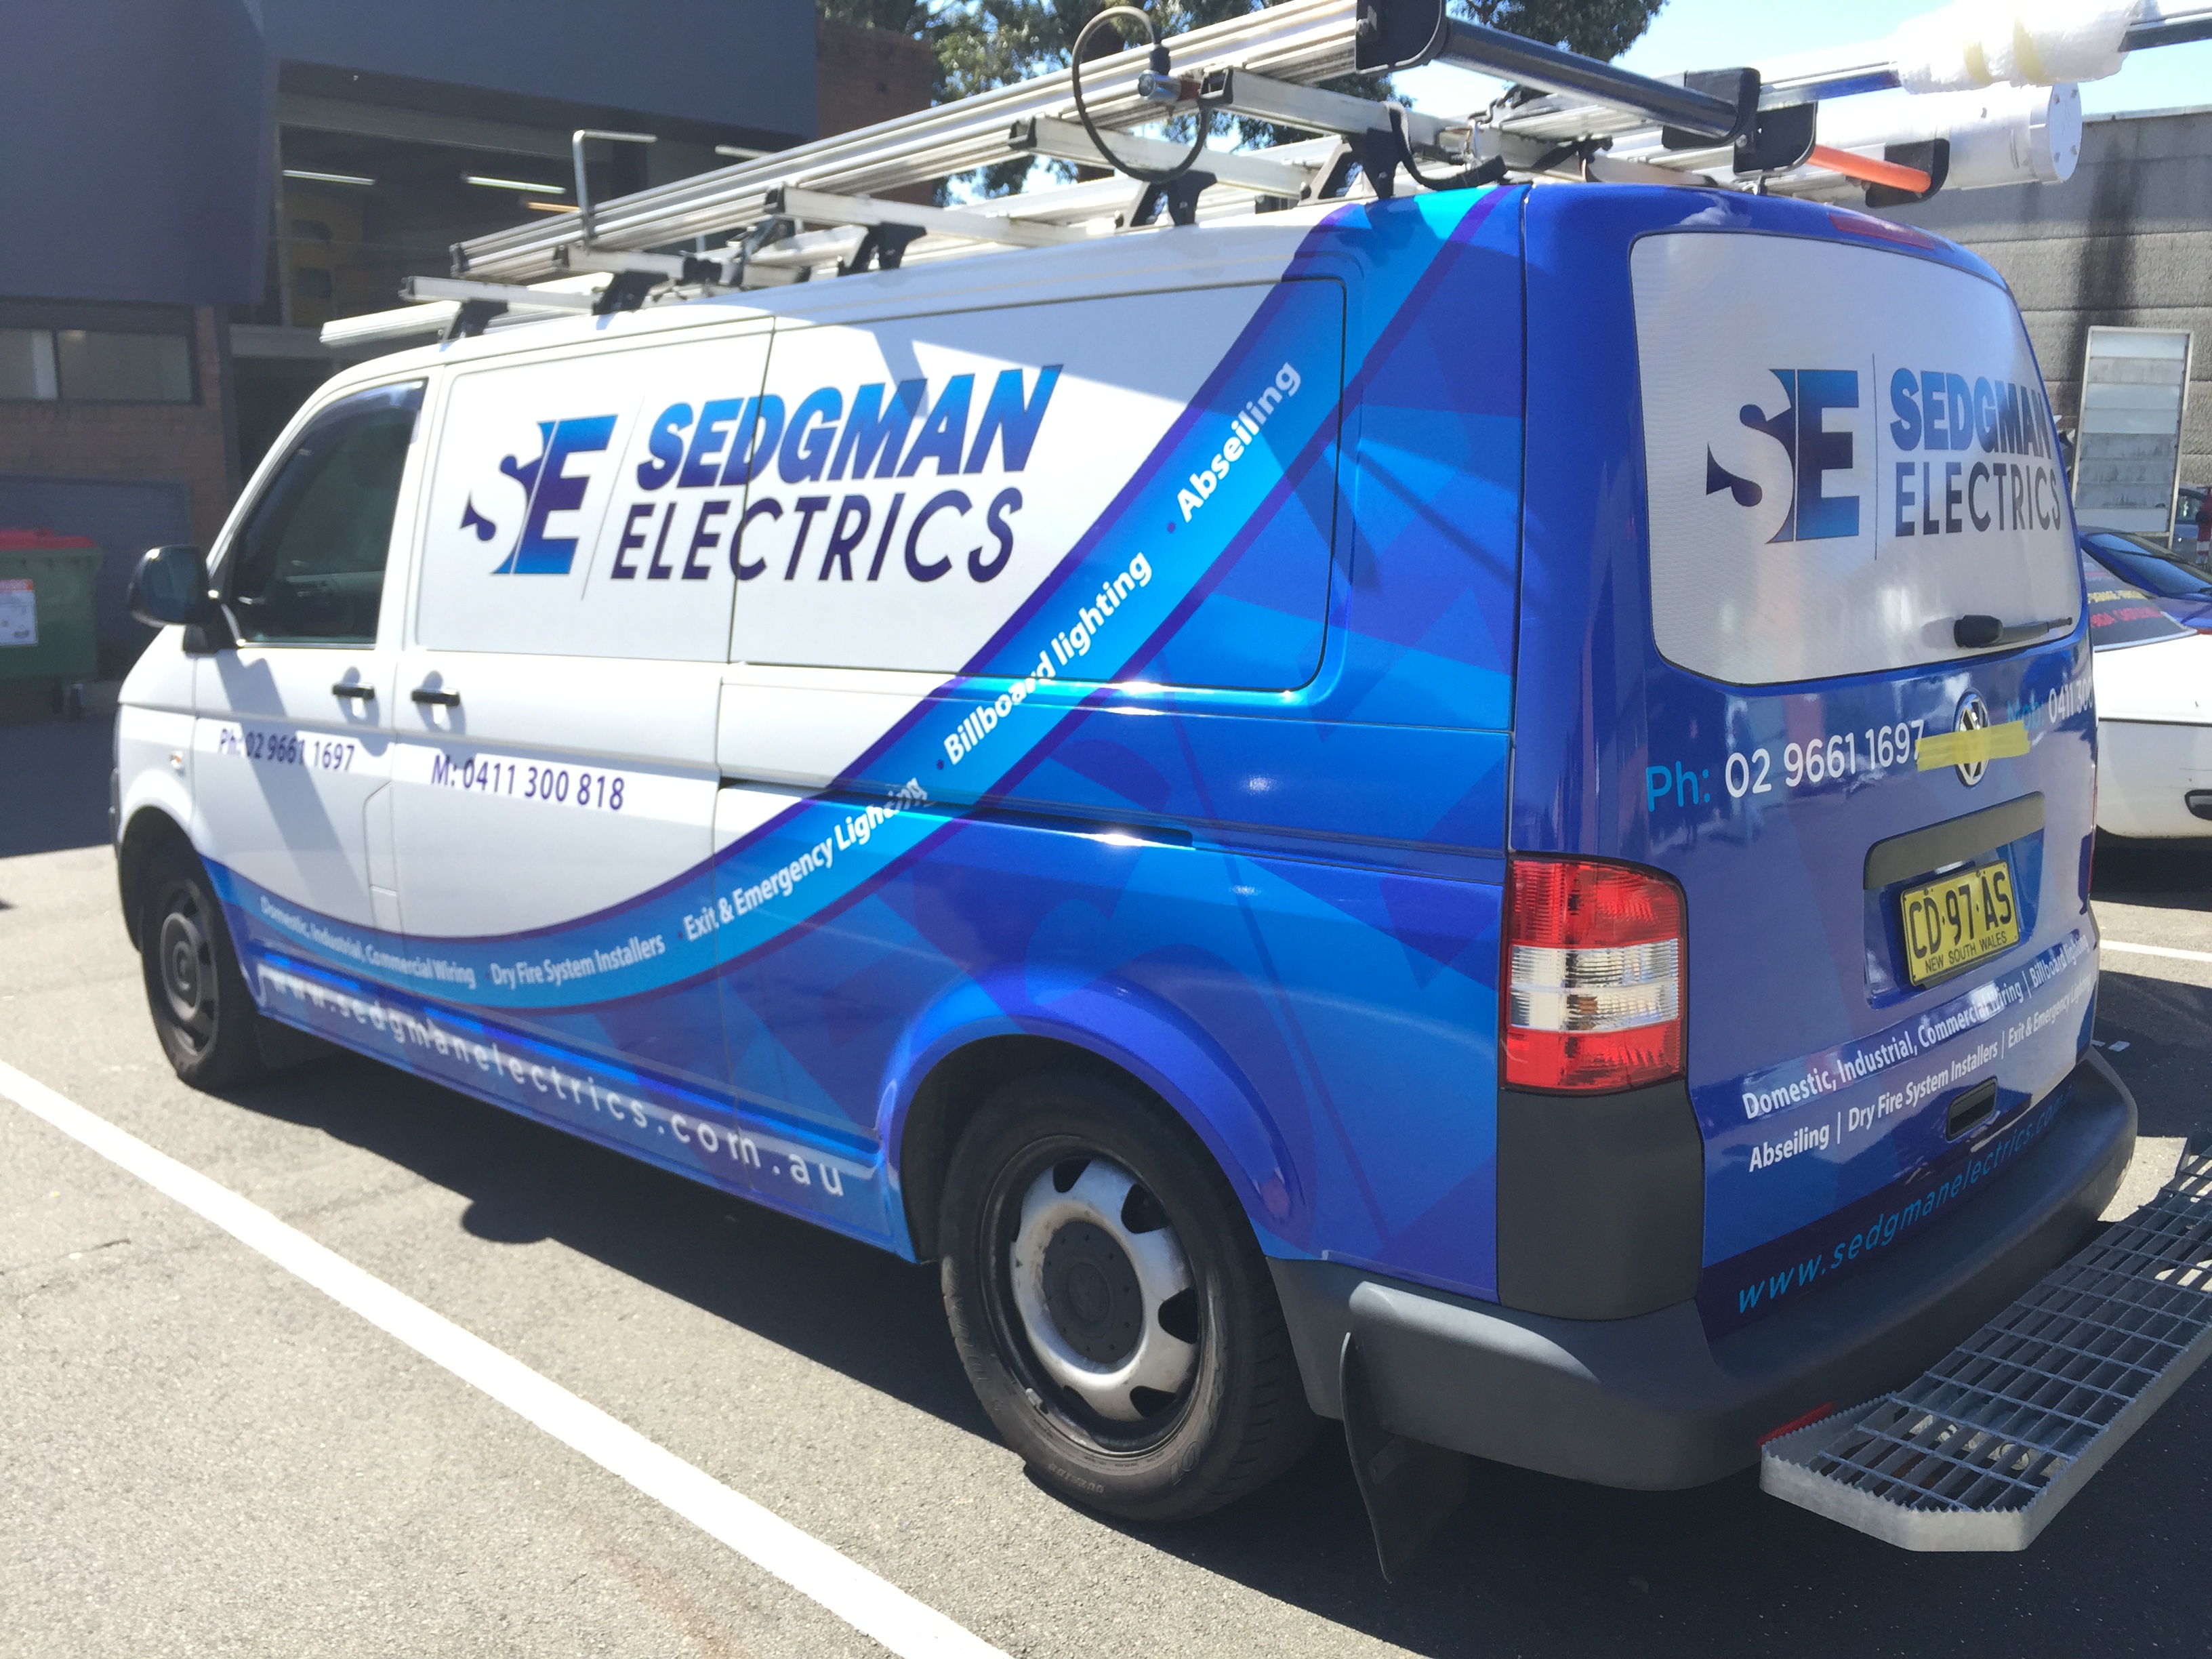 Sedgman Electrics – Fleet Wrap & Branding